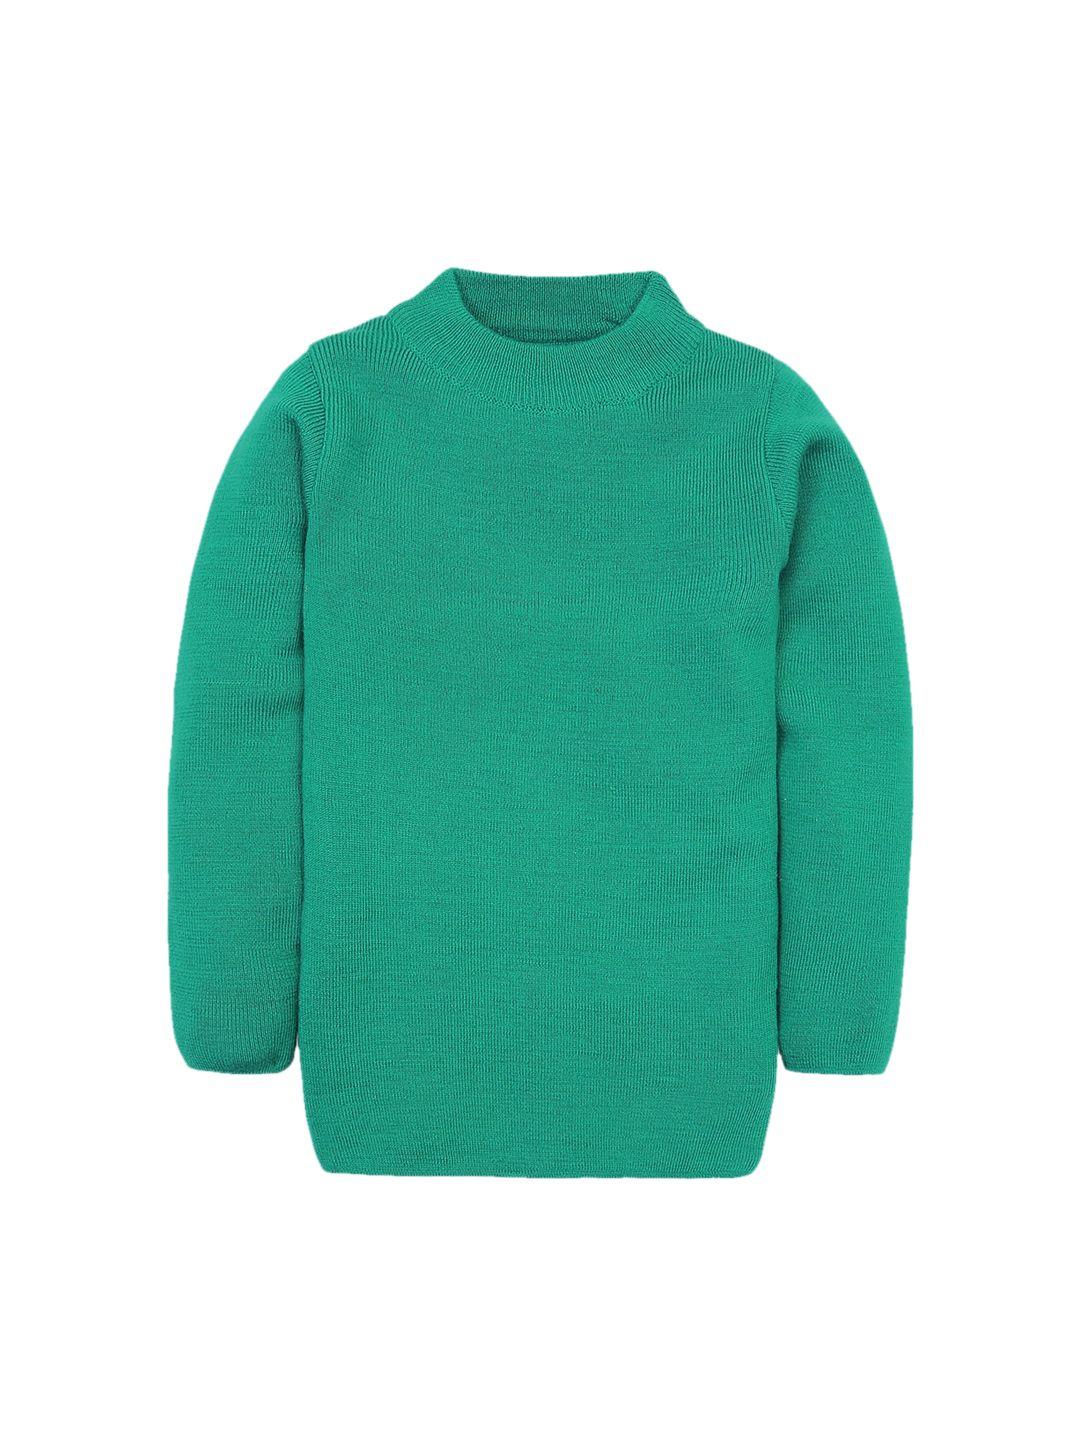 rvk kids green solid sweater